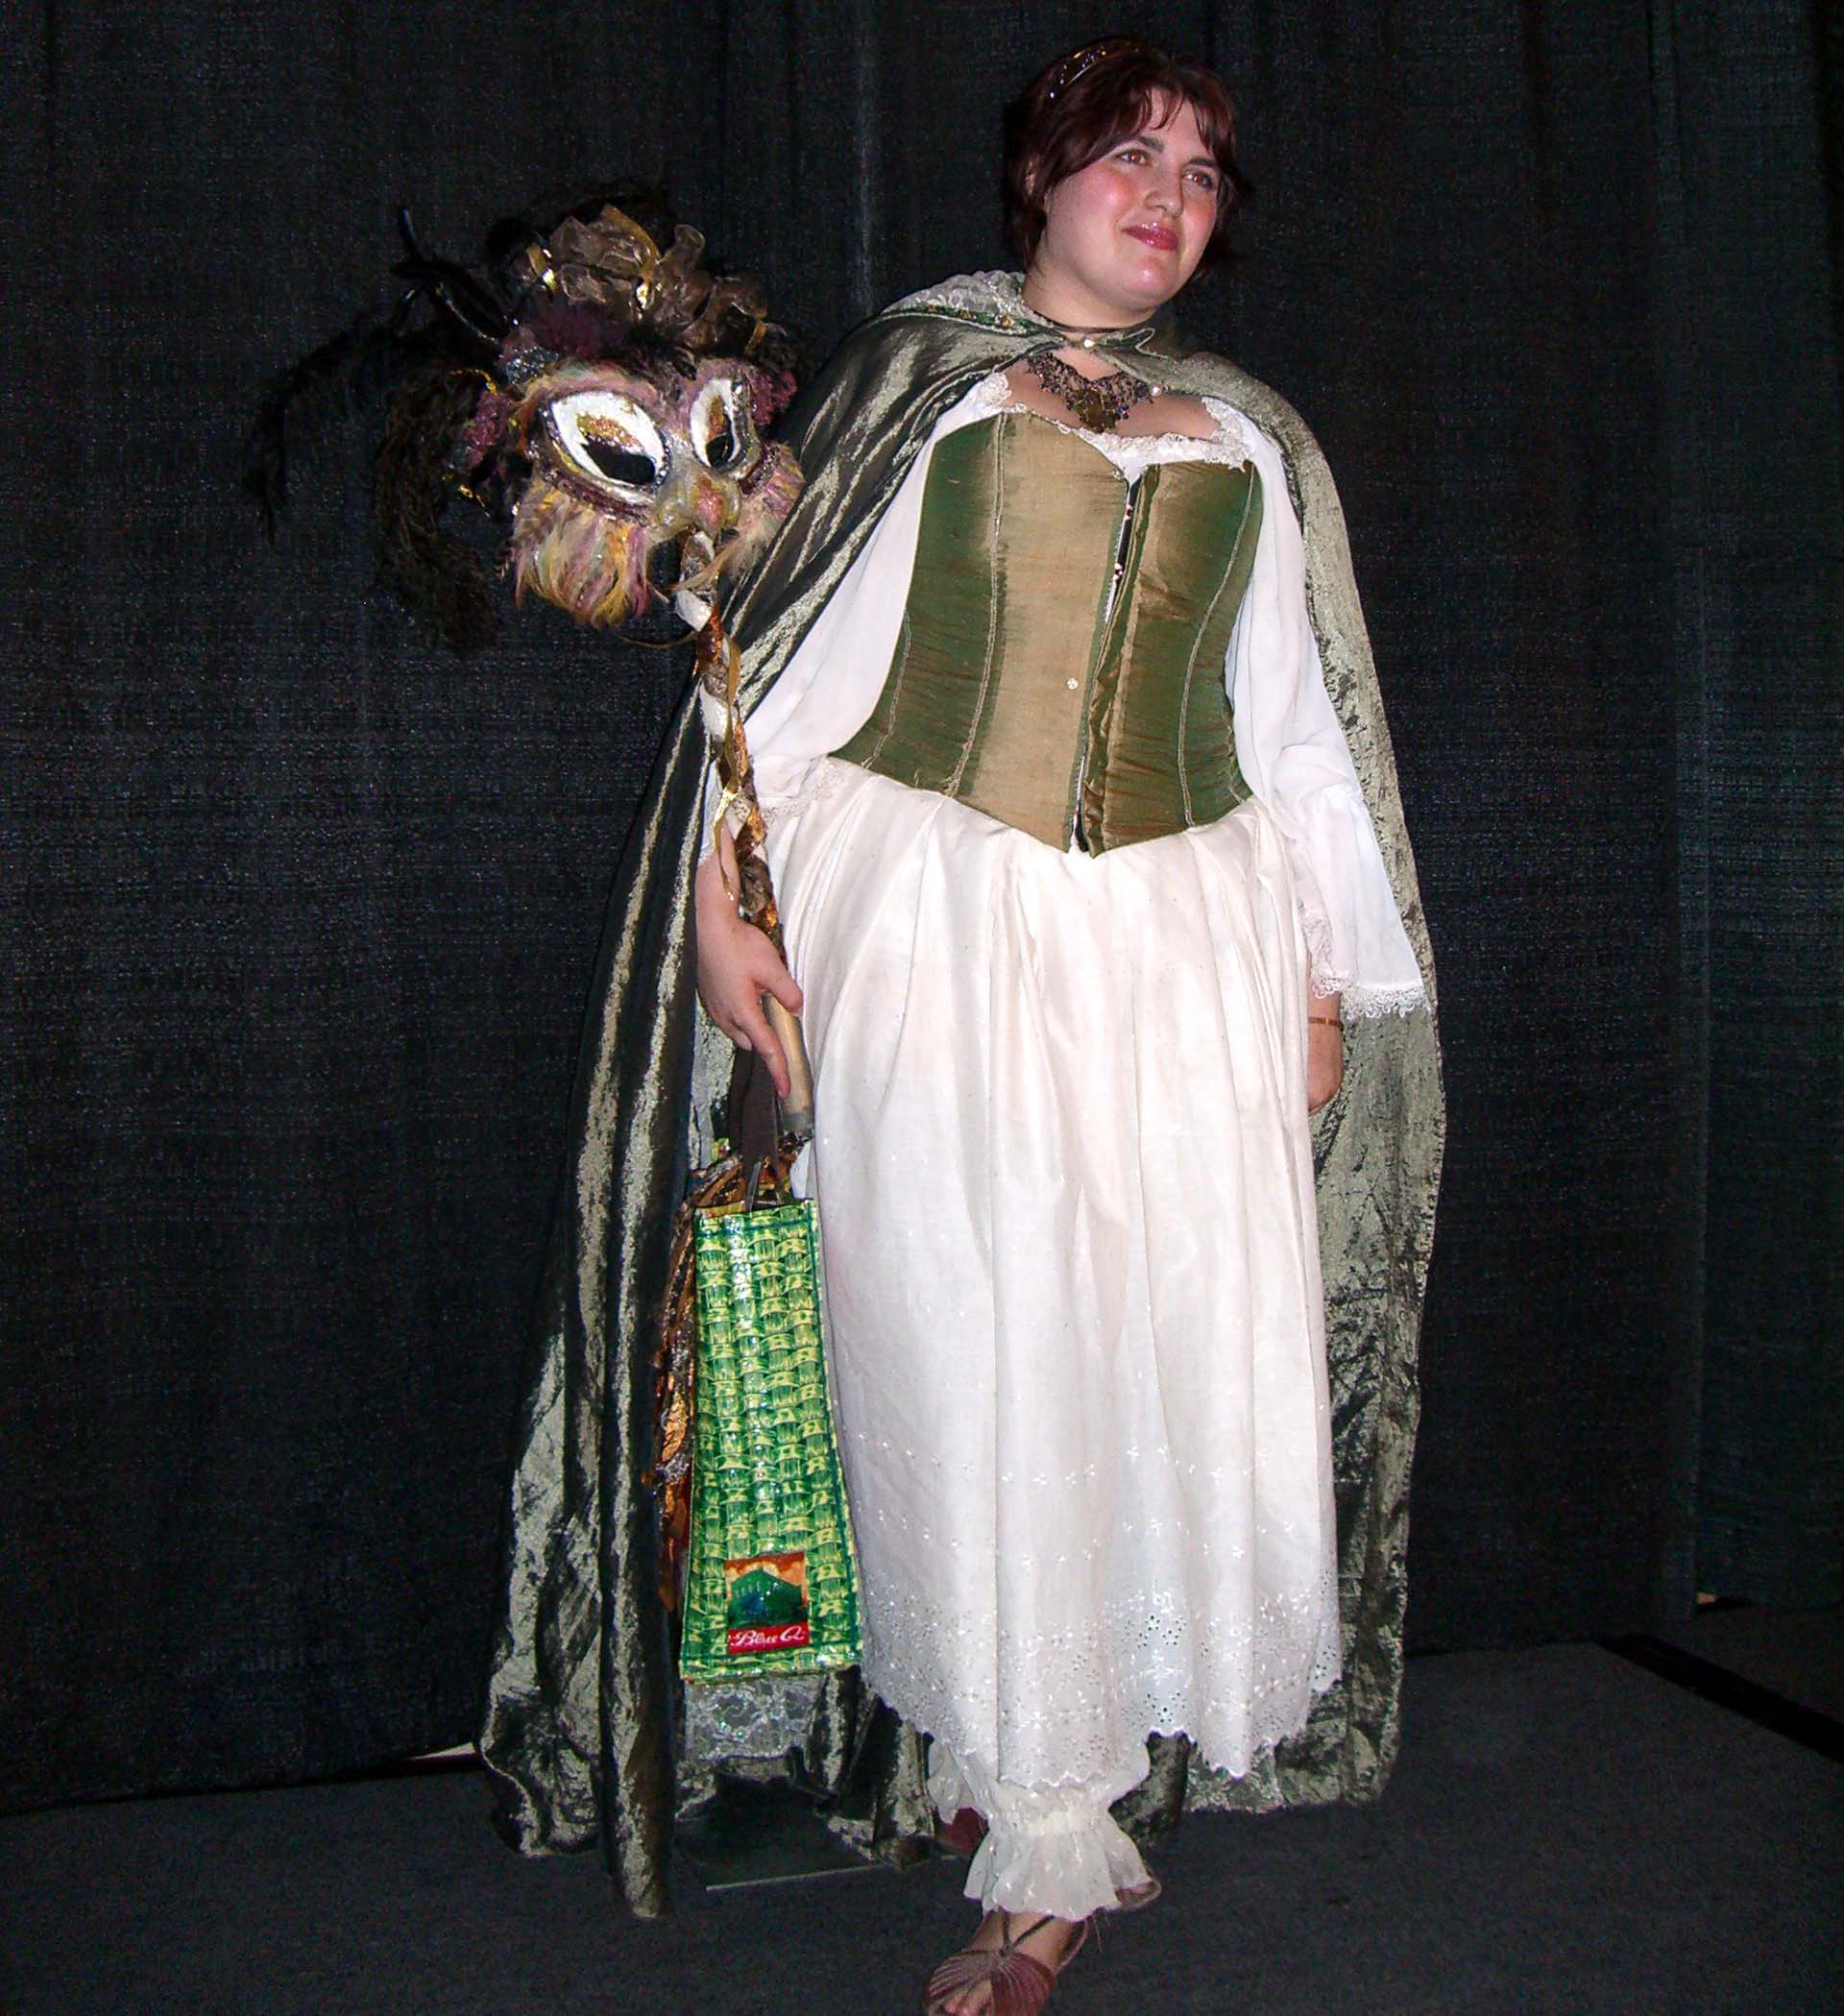 Nara in an owl costume at ApolloCon 2007